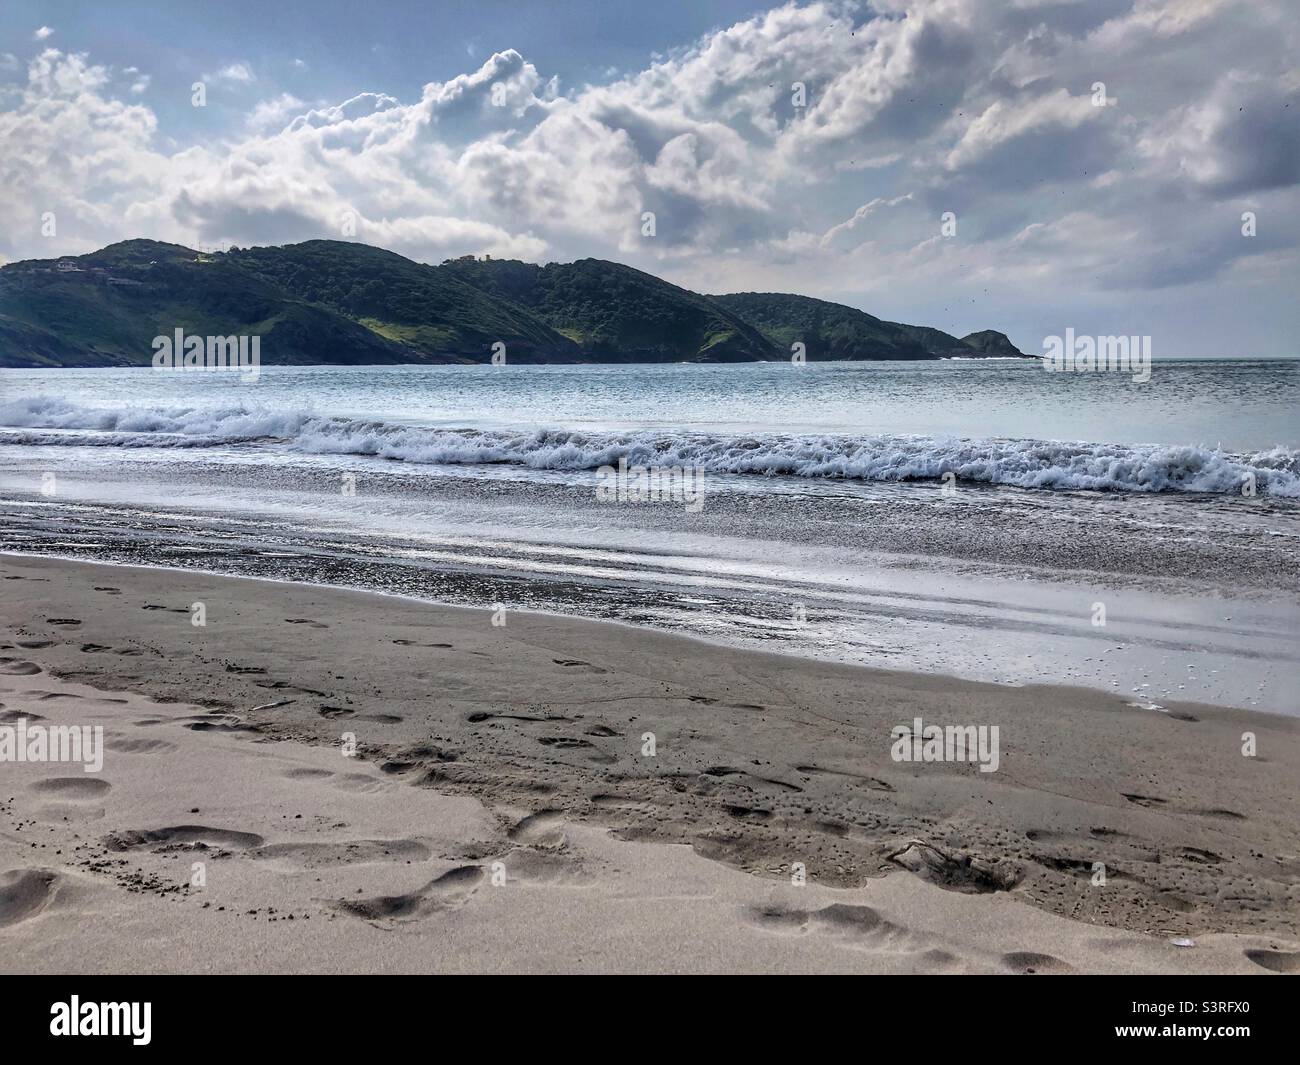 A deserted beach in Buzios, Brazil. Stock Photo